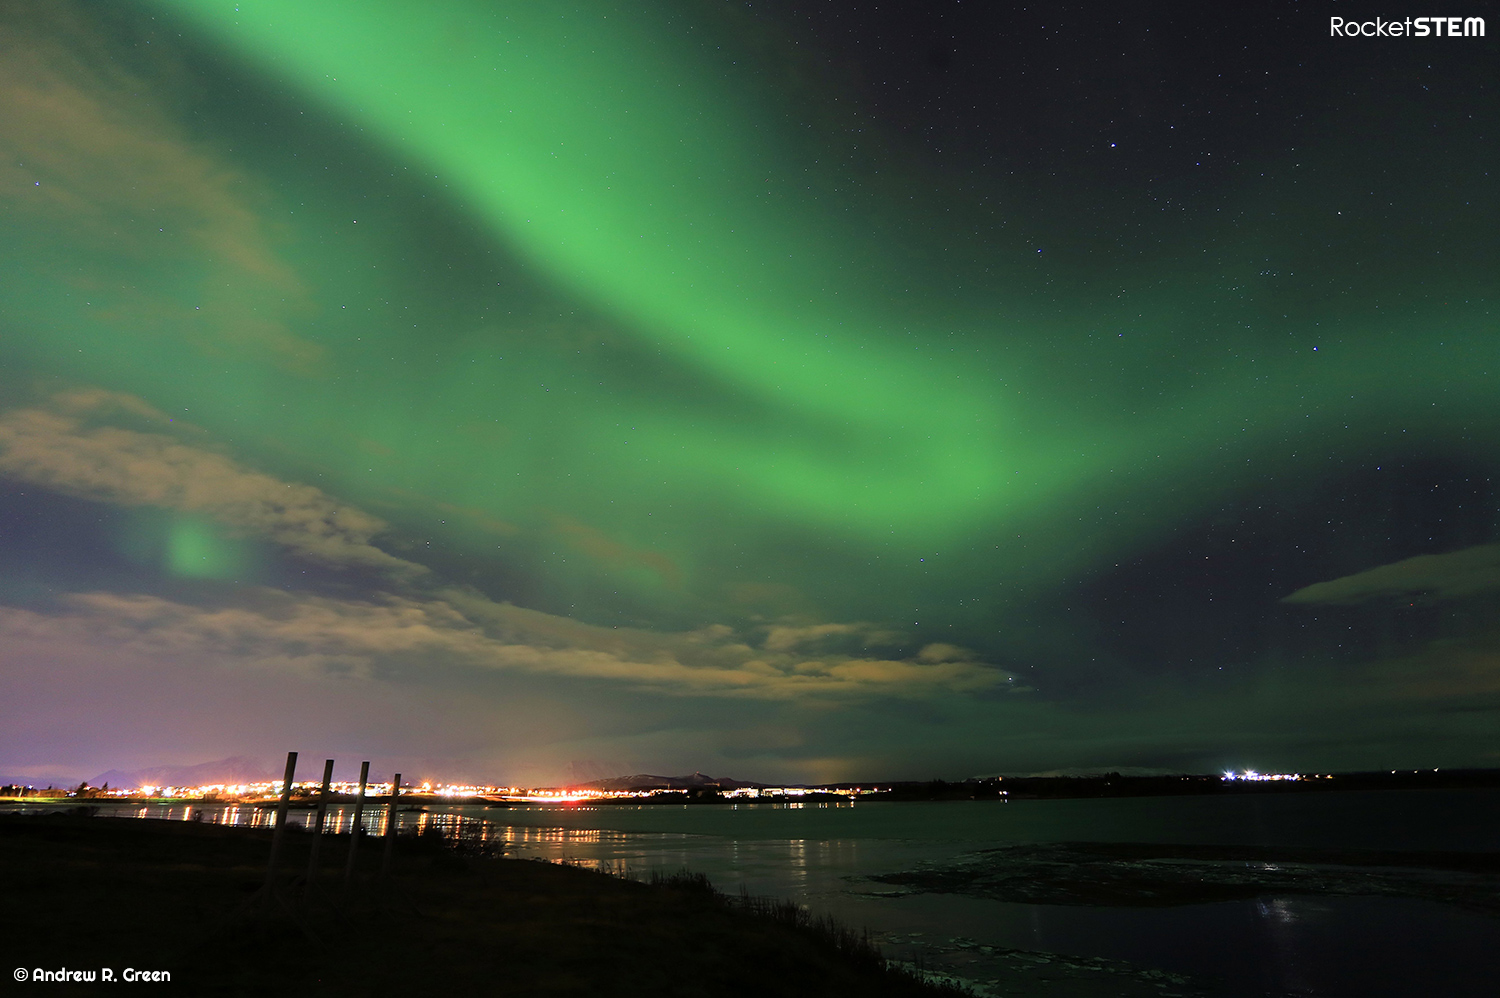 Aurora Borealis as seen in the skies near Reykjavik, Iceland. Photo: Andrew Green